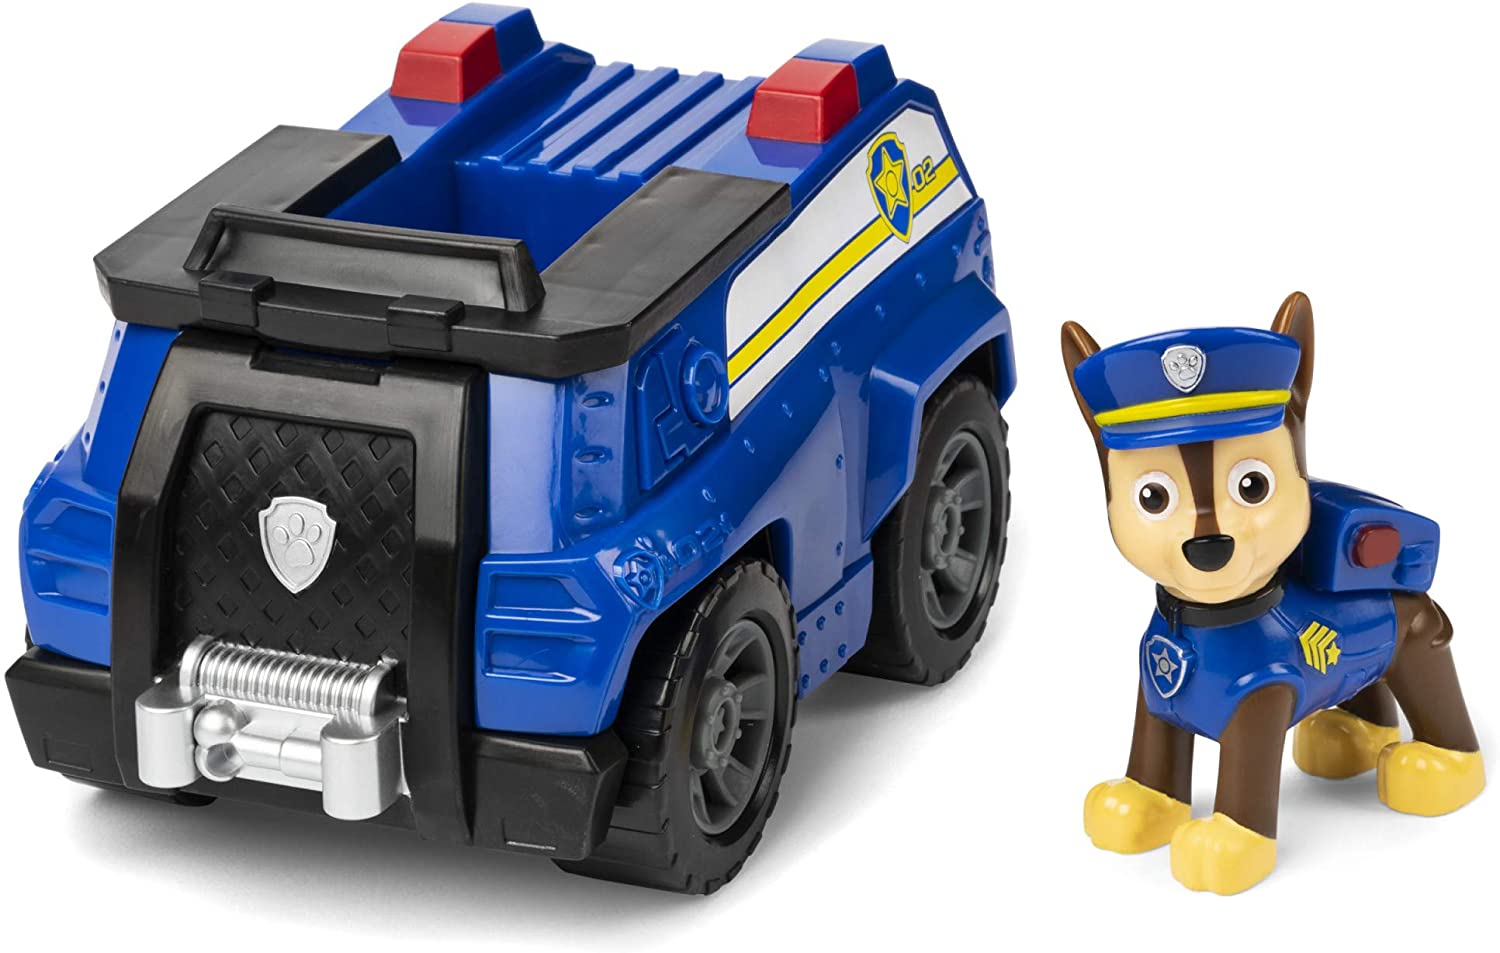 Chase Patrol figurine and vehicle